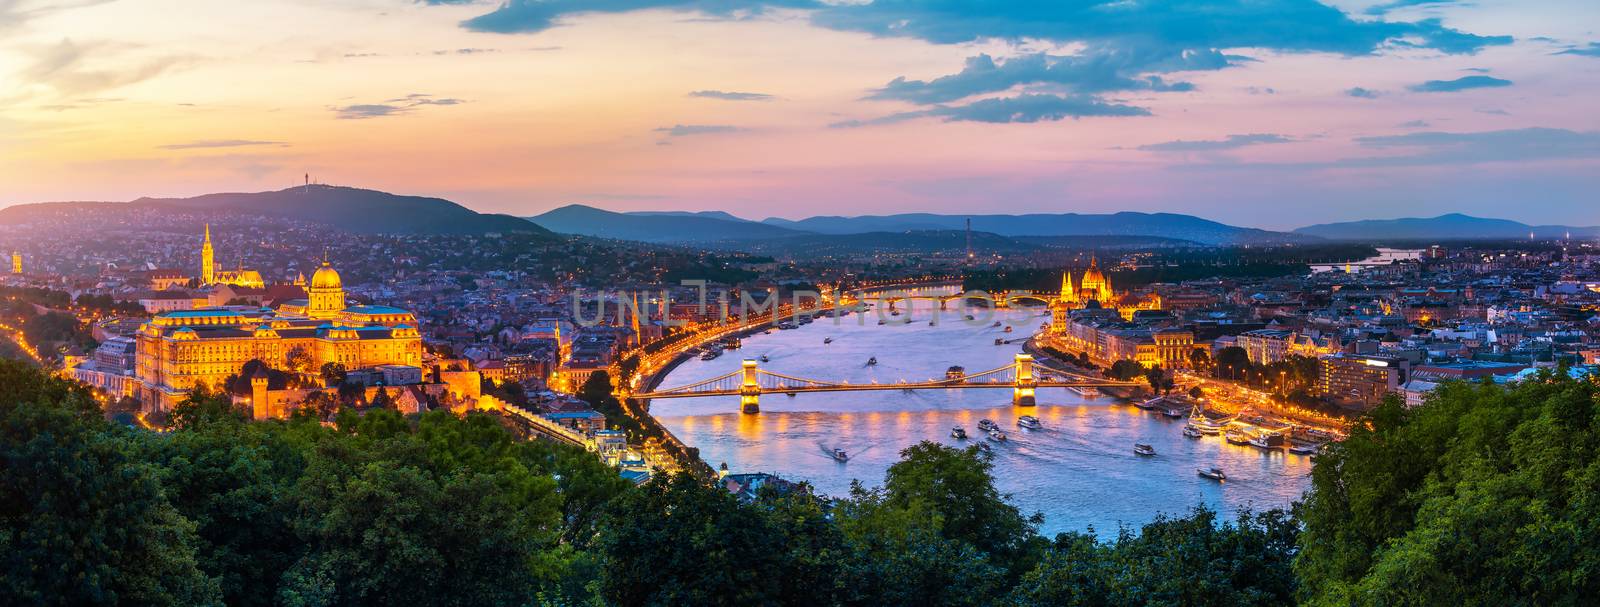 Panoramic view on landmarks of Budapest at sunset, Hungary